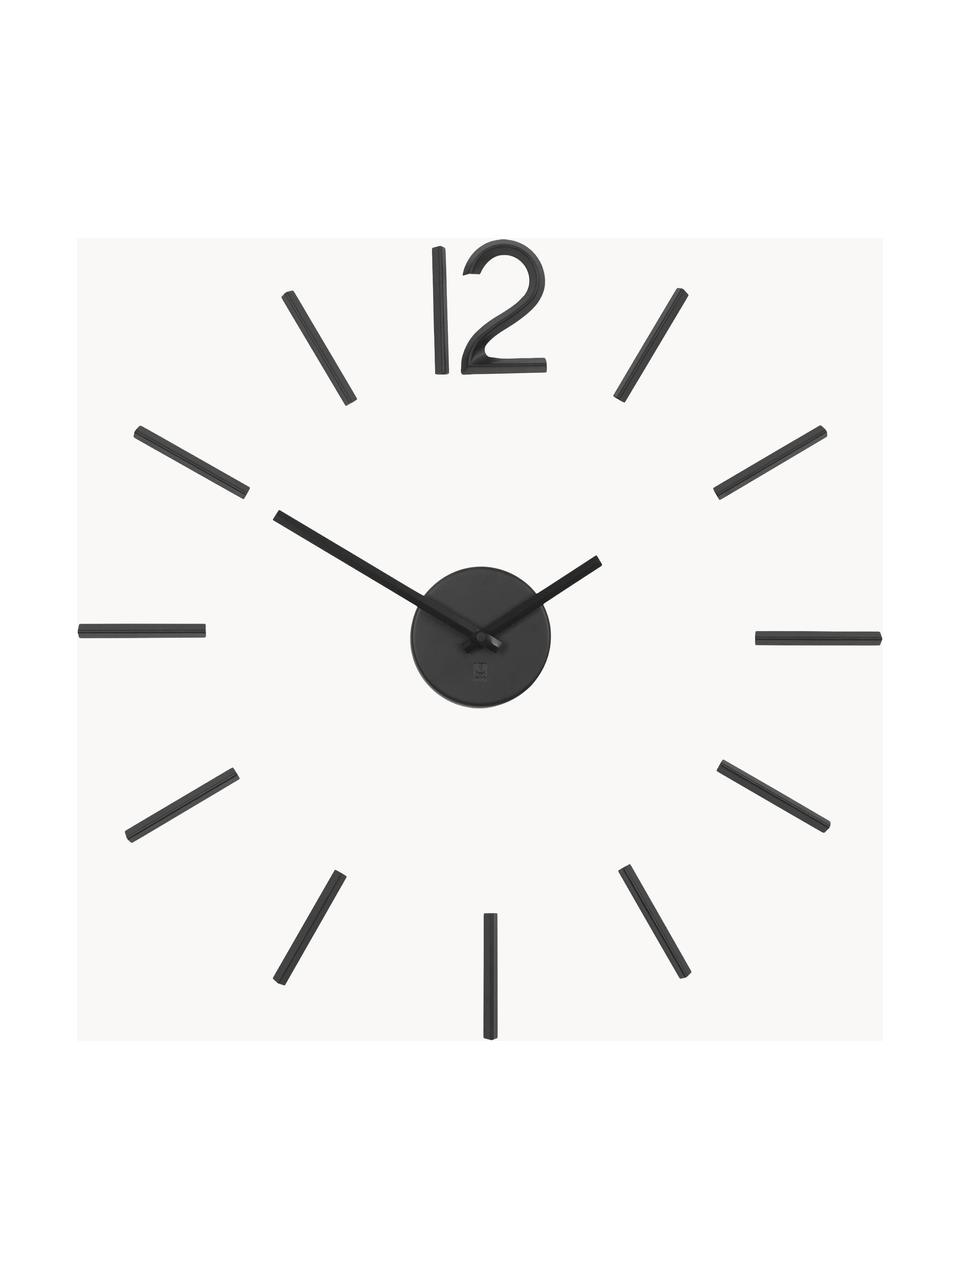 Zegar ścienny Blink, Aluminium lakierowane, Czarny, Ø 60 cm